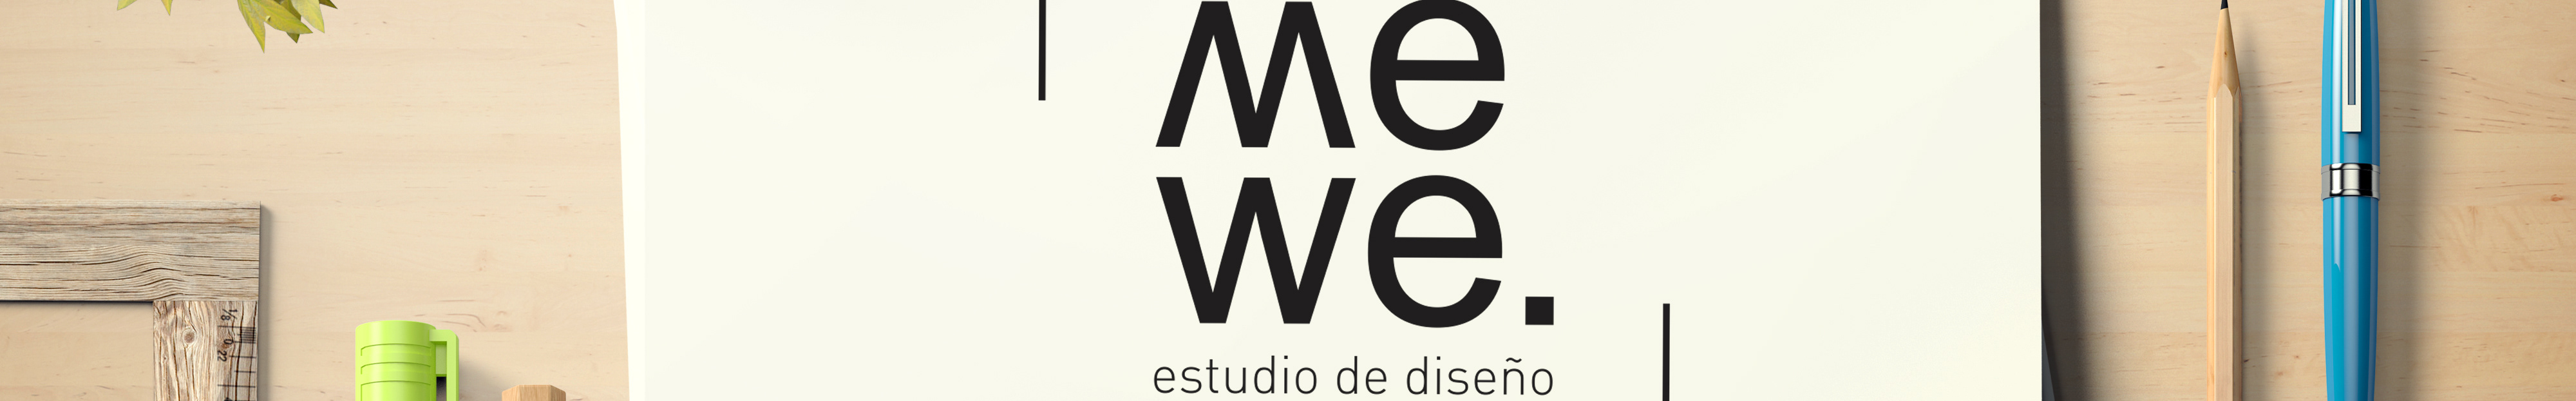 MeWe Estudio のプロファイルバナー